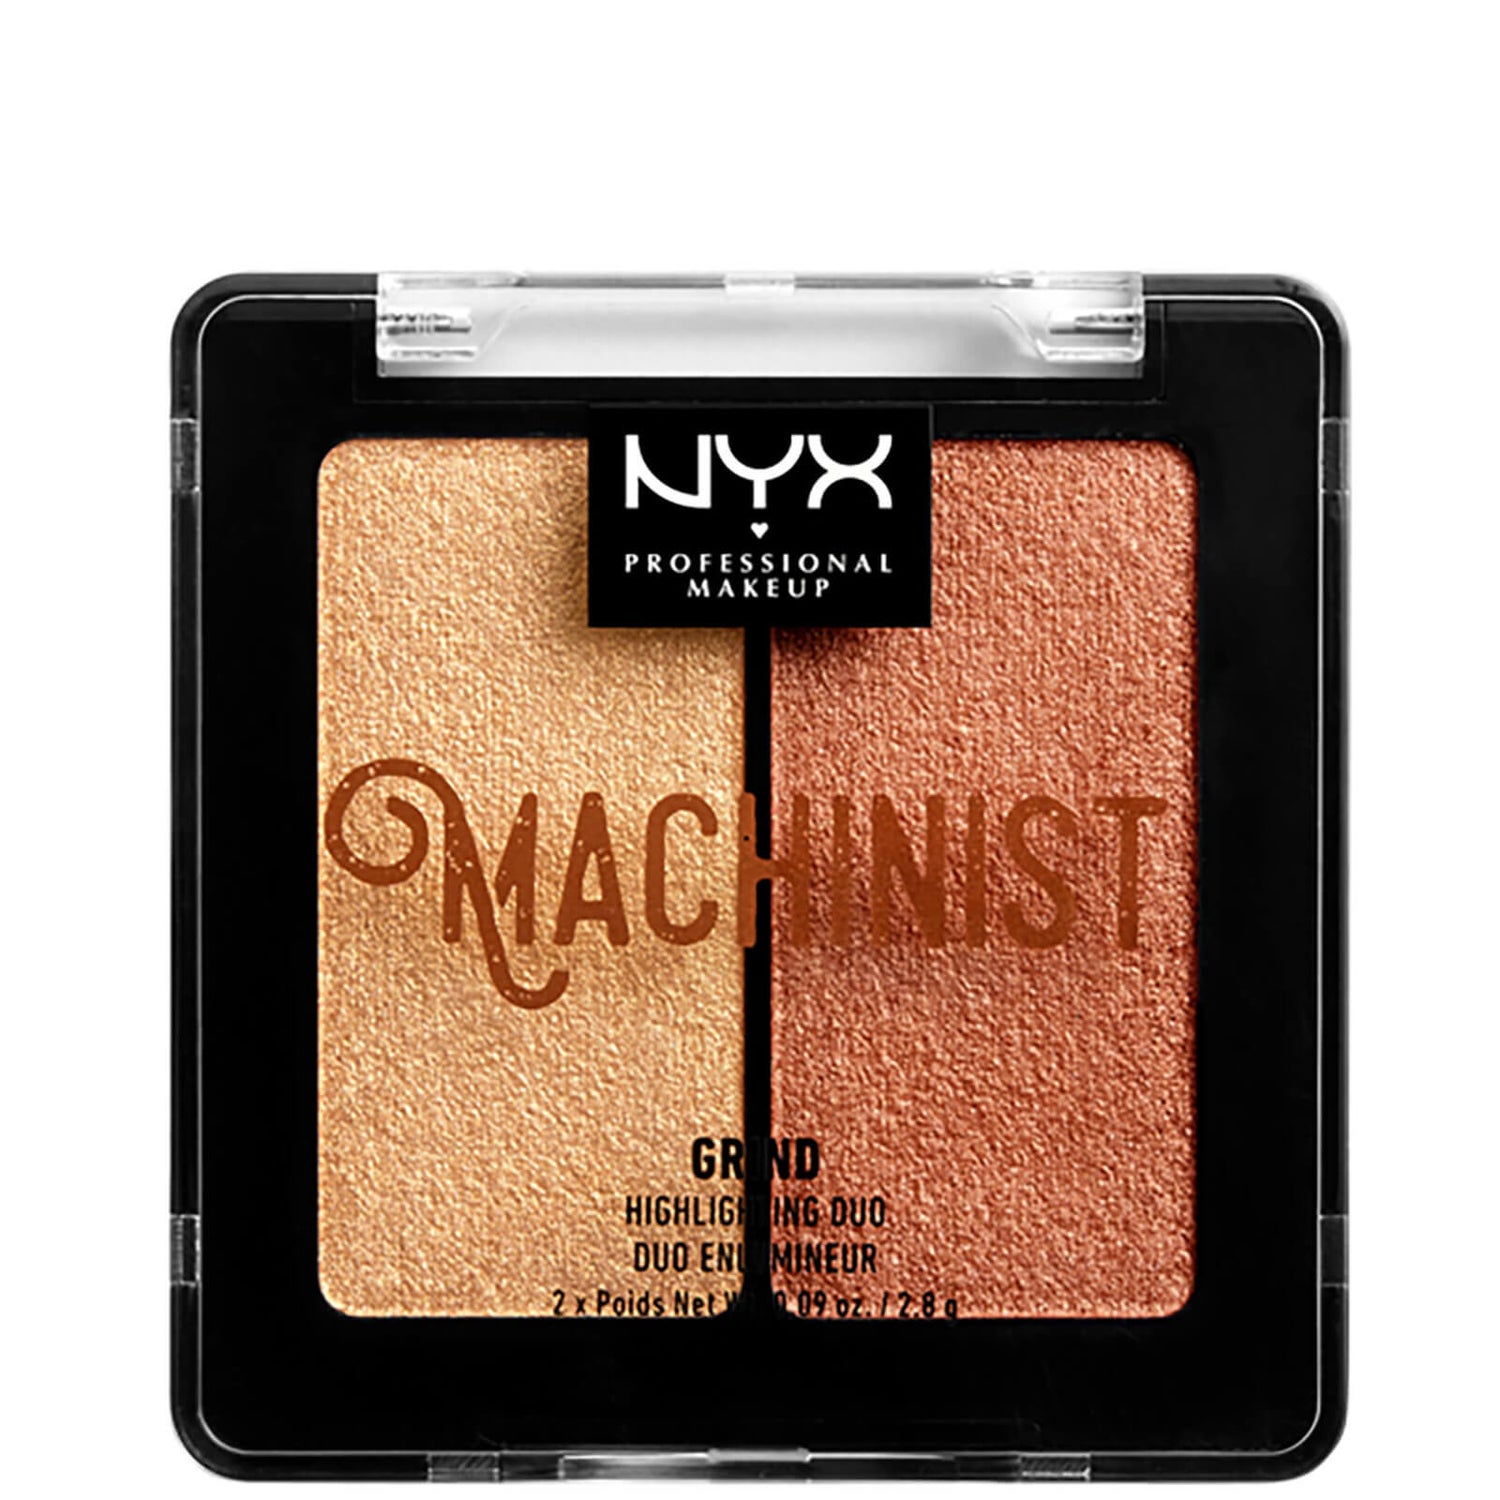 Duo Iluminador Metalizado Machinist da NYX Professional Makeup - Grind